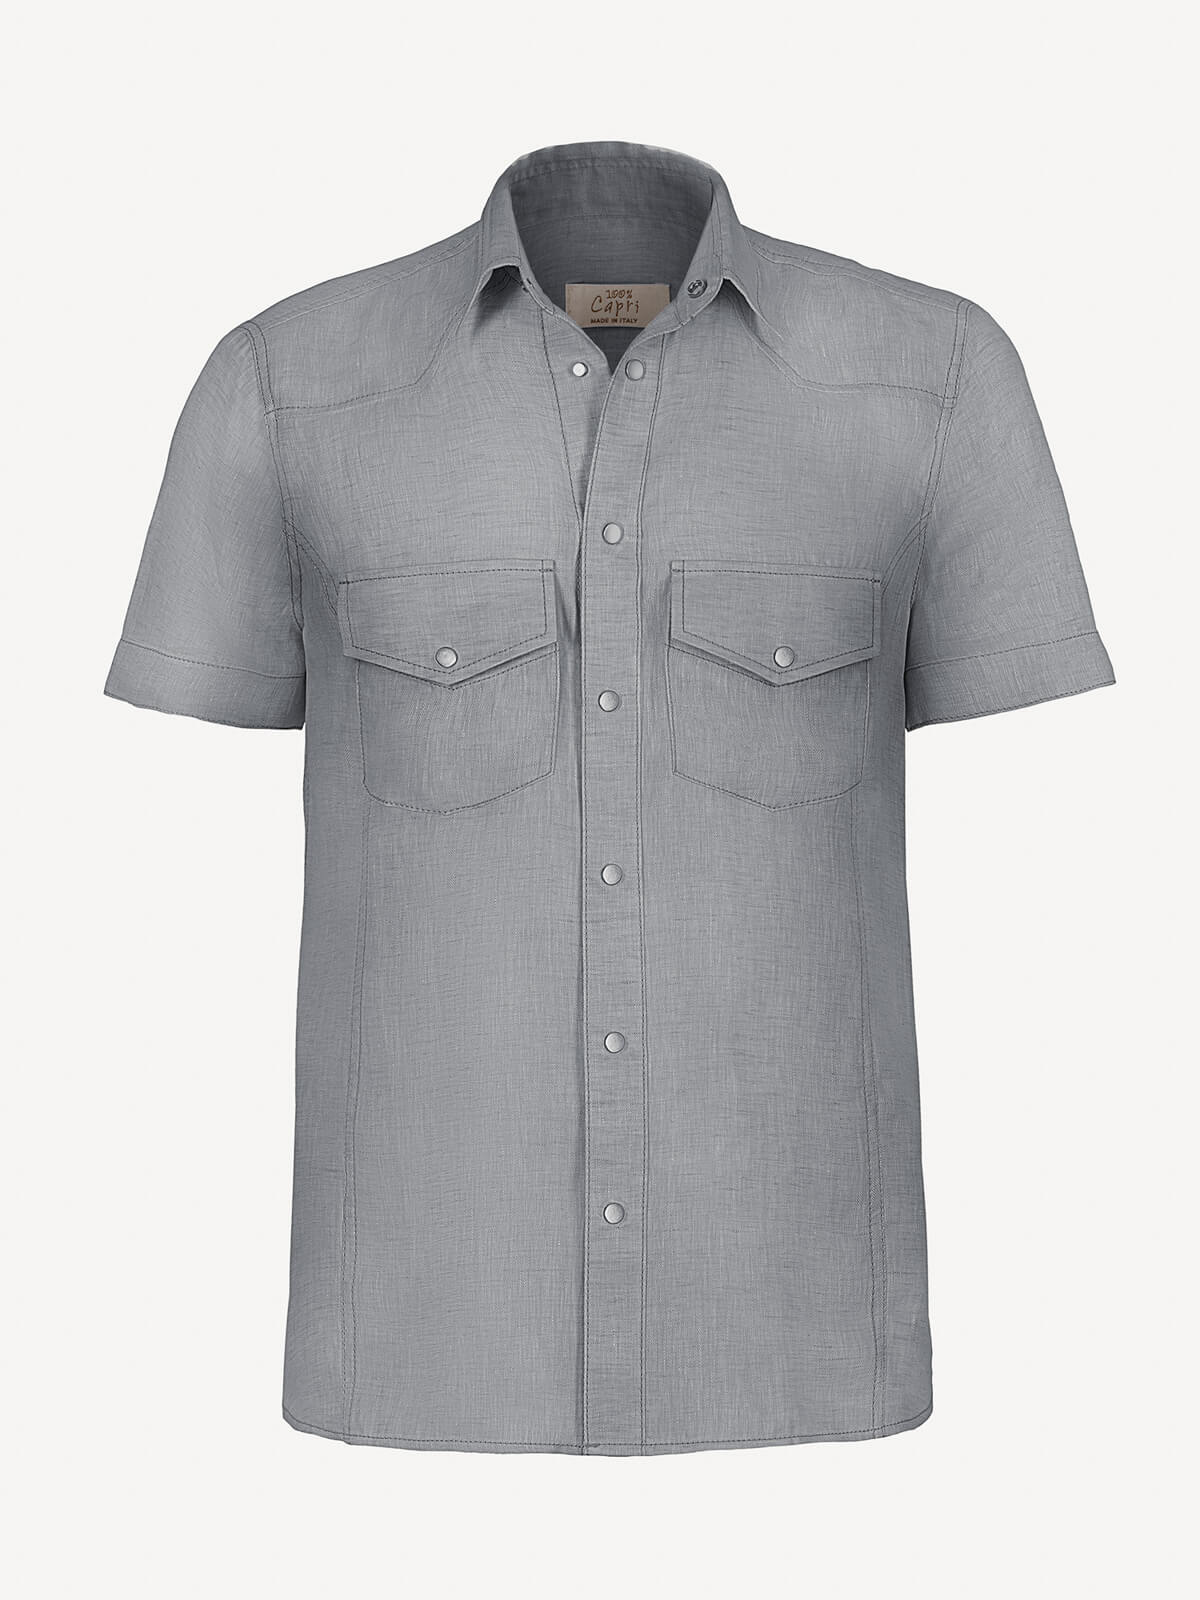 Camicia Denim front dark grey color 100% Capri